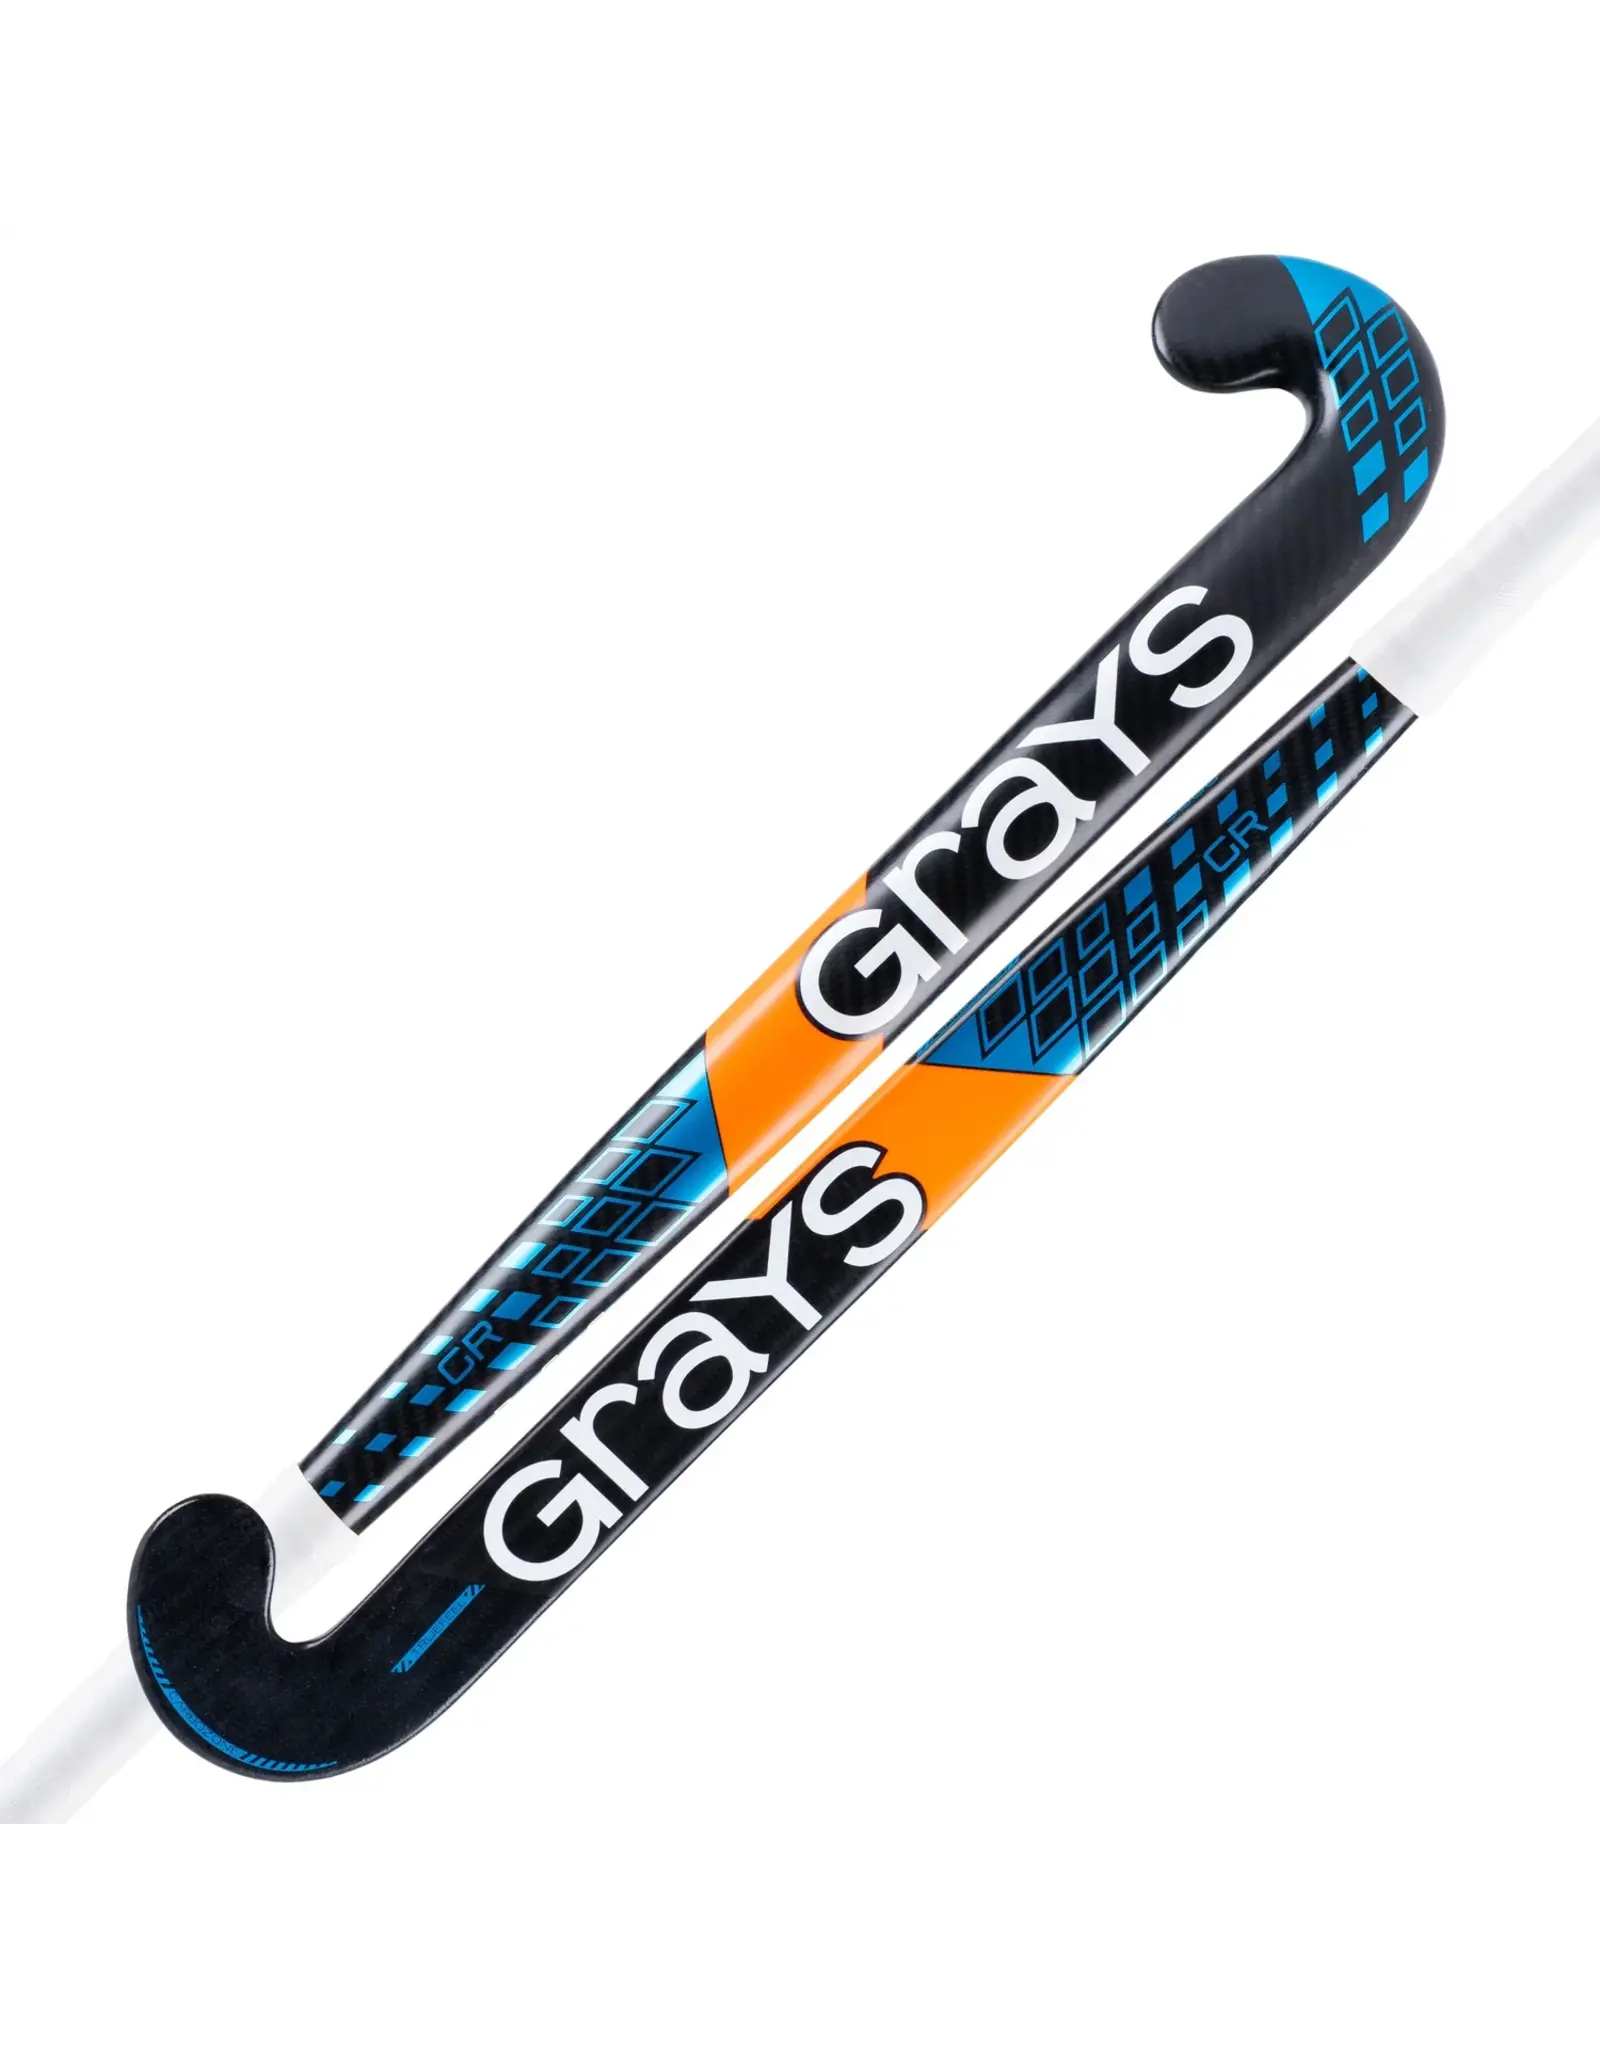 Grays GR5000 Ultrabow Jun Stk-Black / Blue